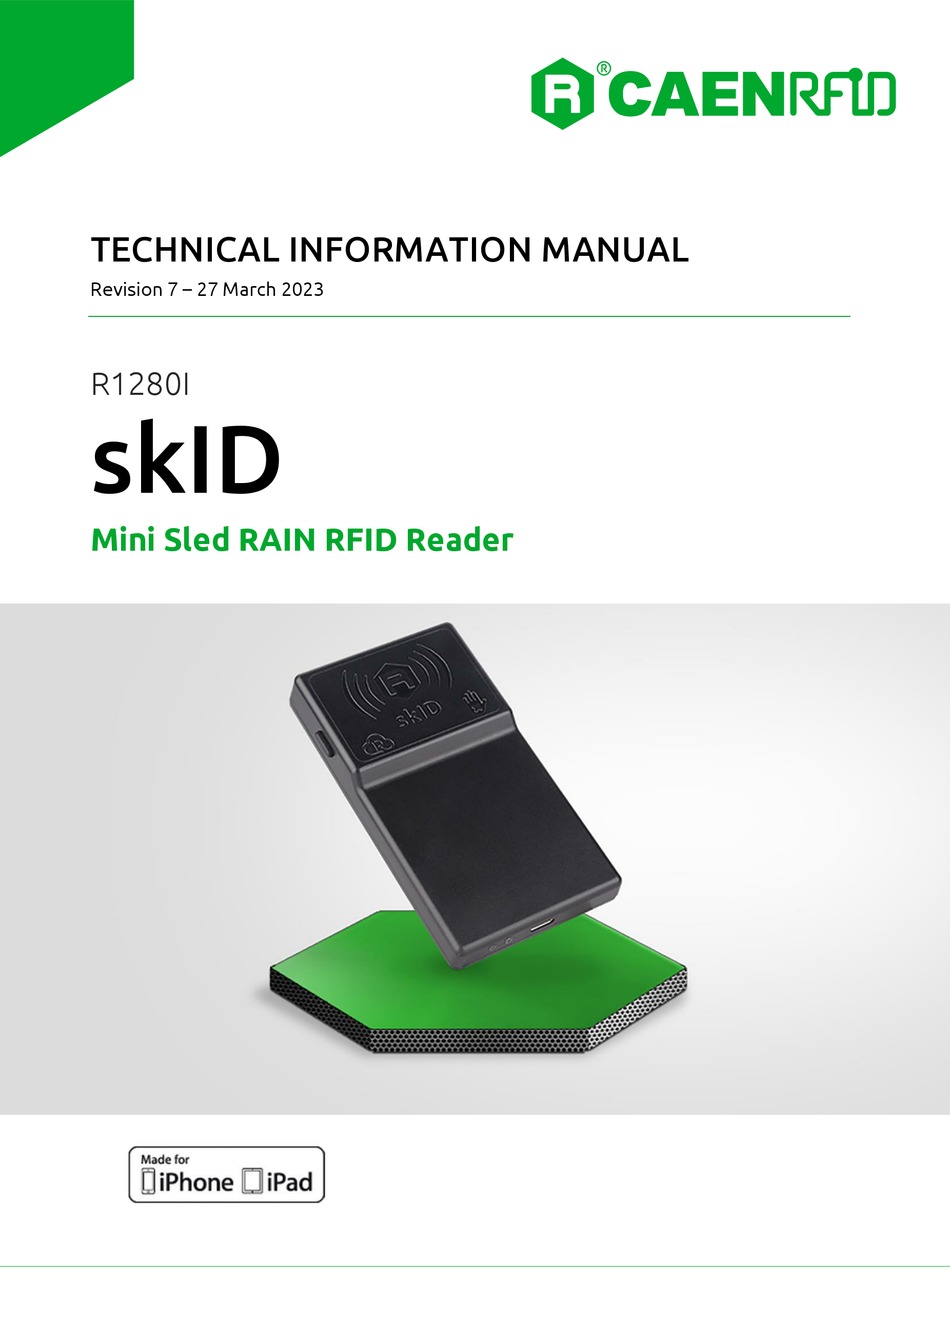 R1280I Mini Sled RAIN RFID Reader (R1280I)